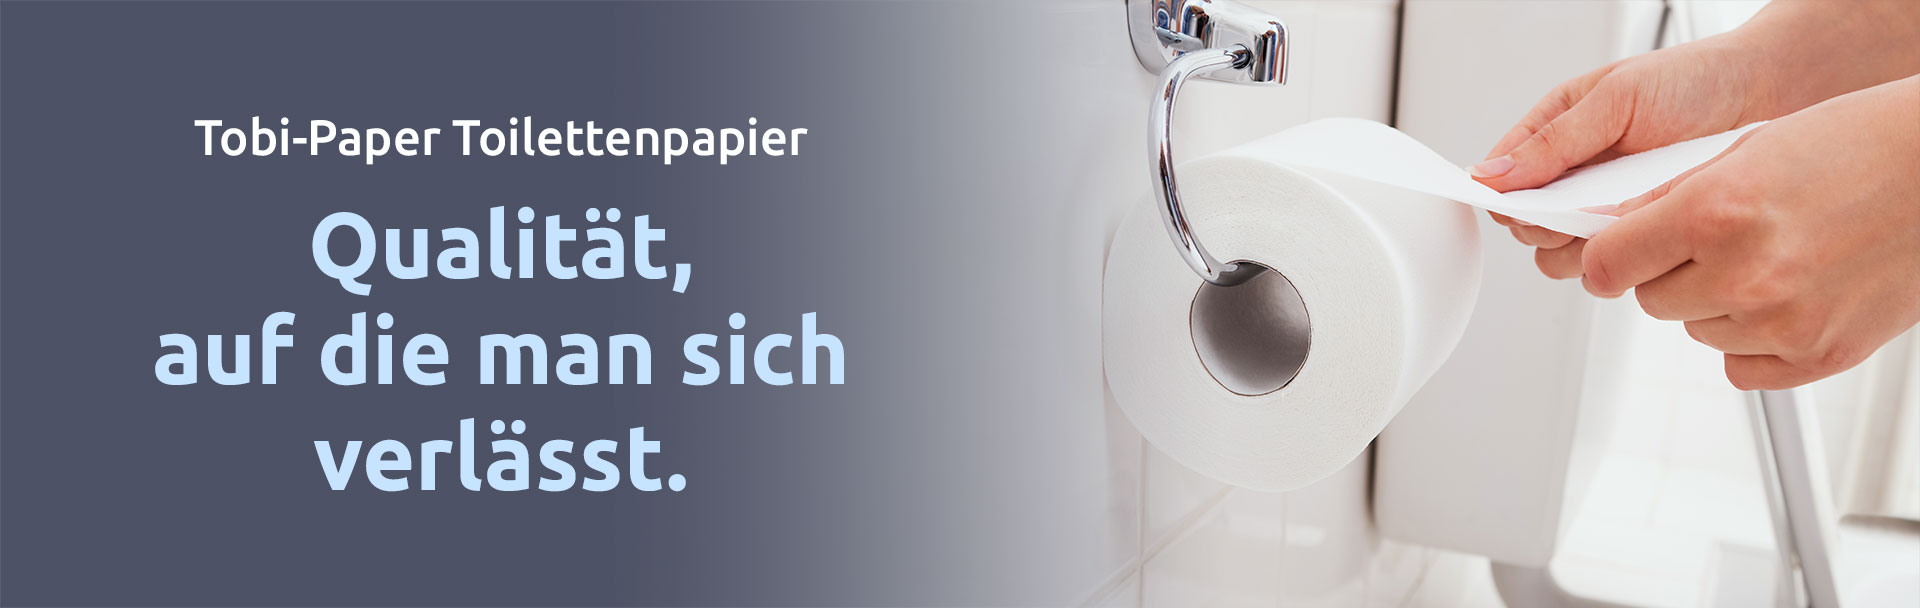 banner-toilettenpapier